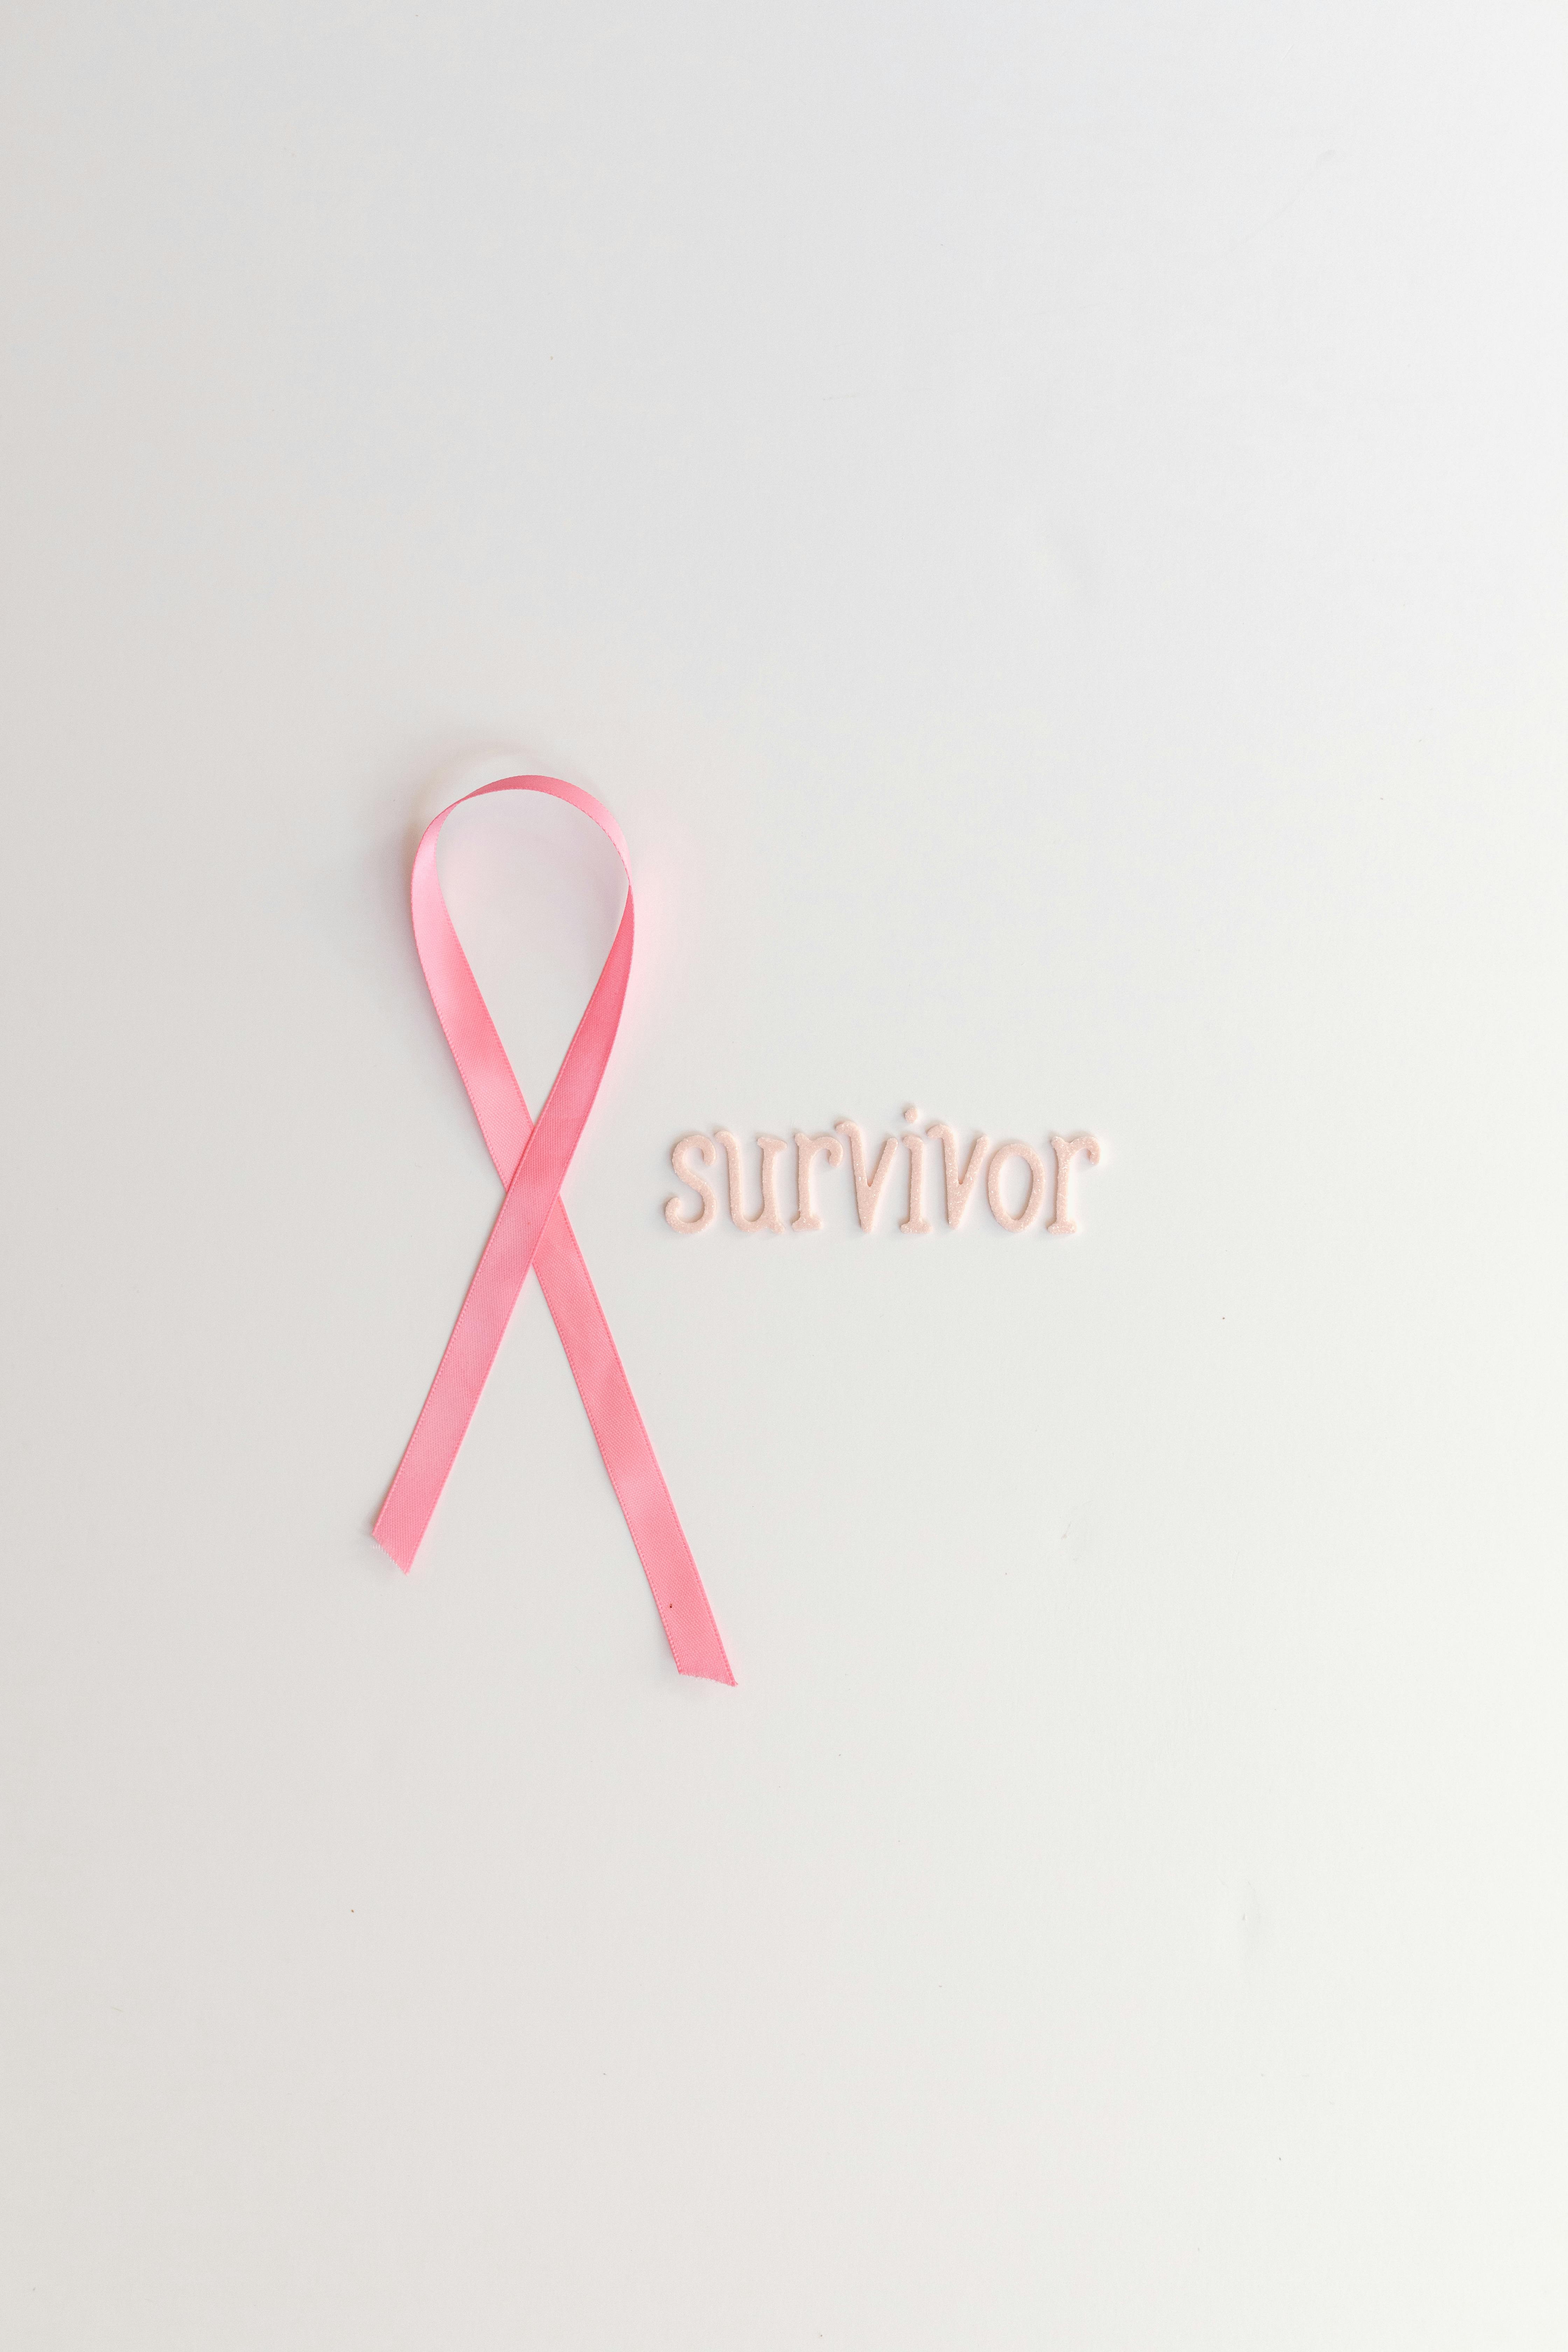 Premium Vector  Watercolor breast cancer awareness month illustration